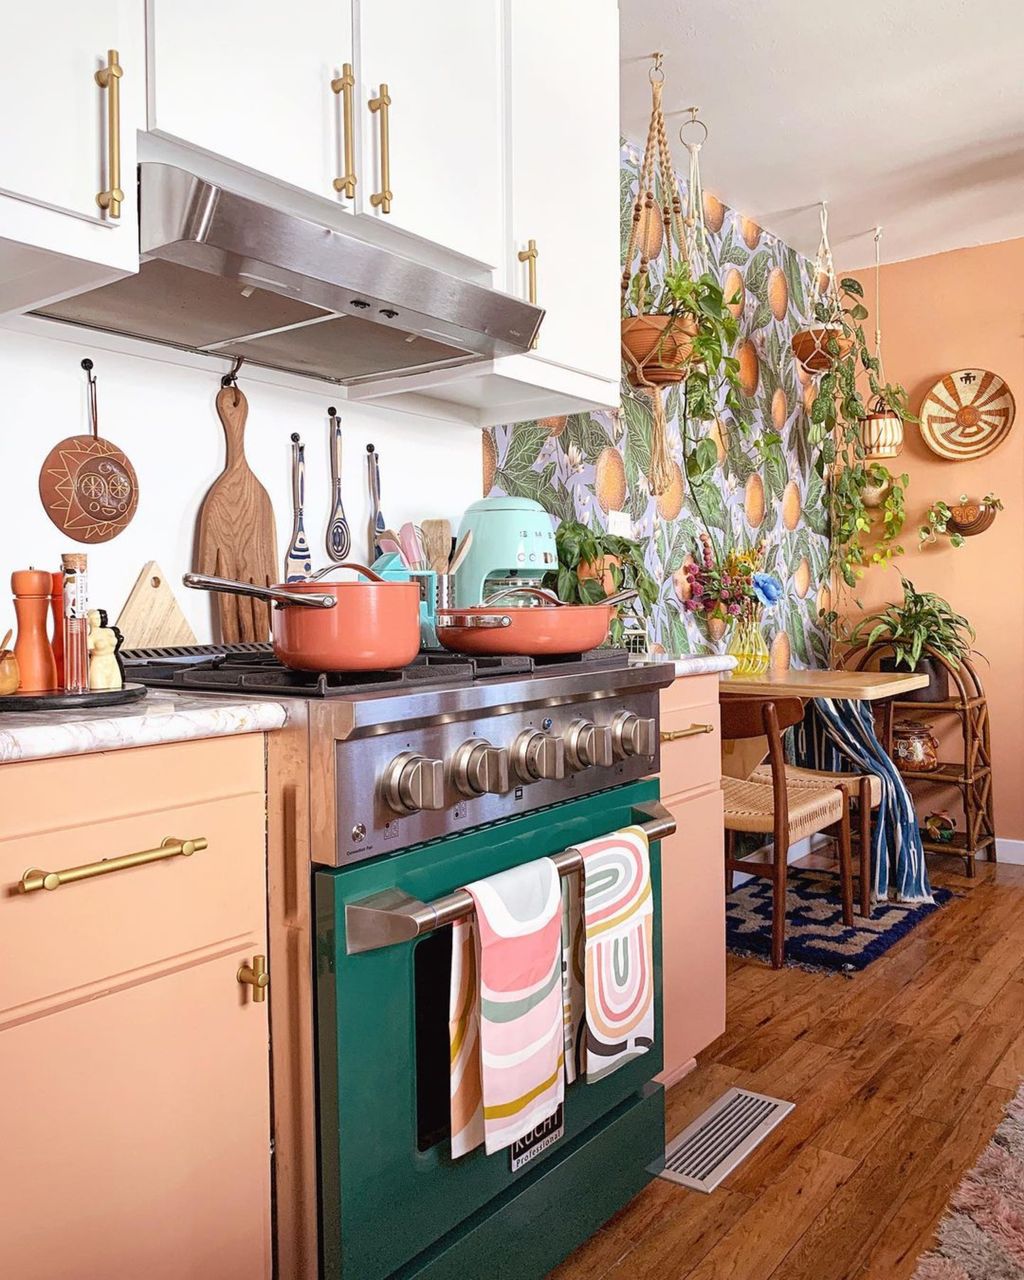 22 kitchen wallpaper ideas – modern designs to update your cooking